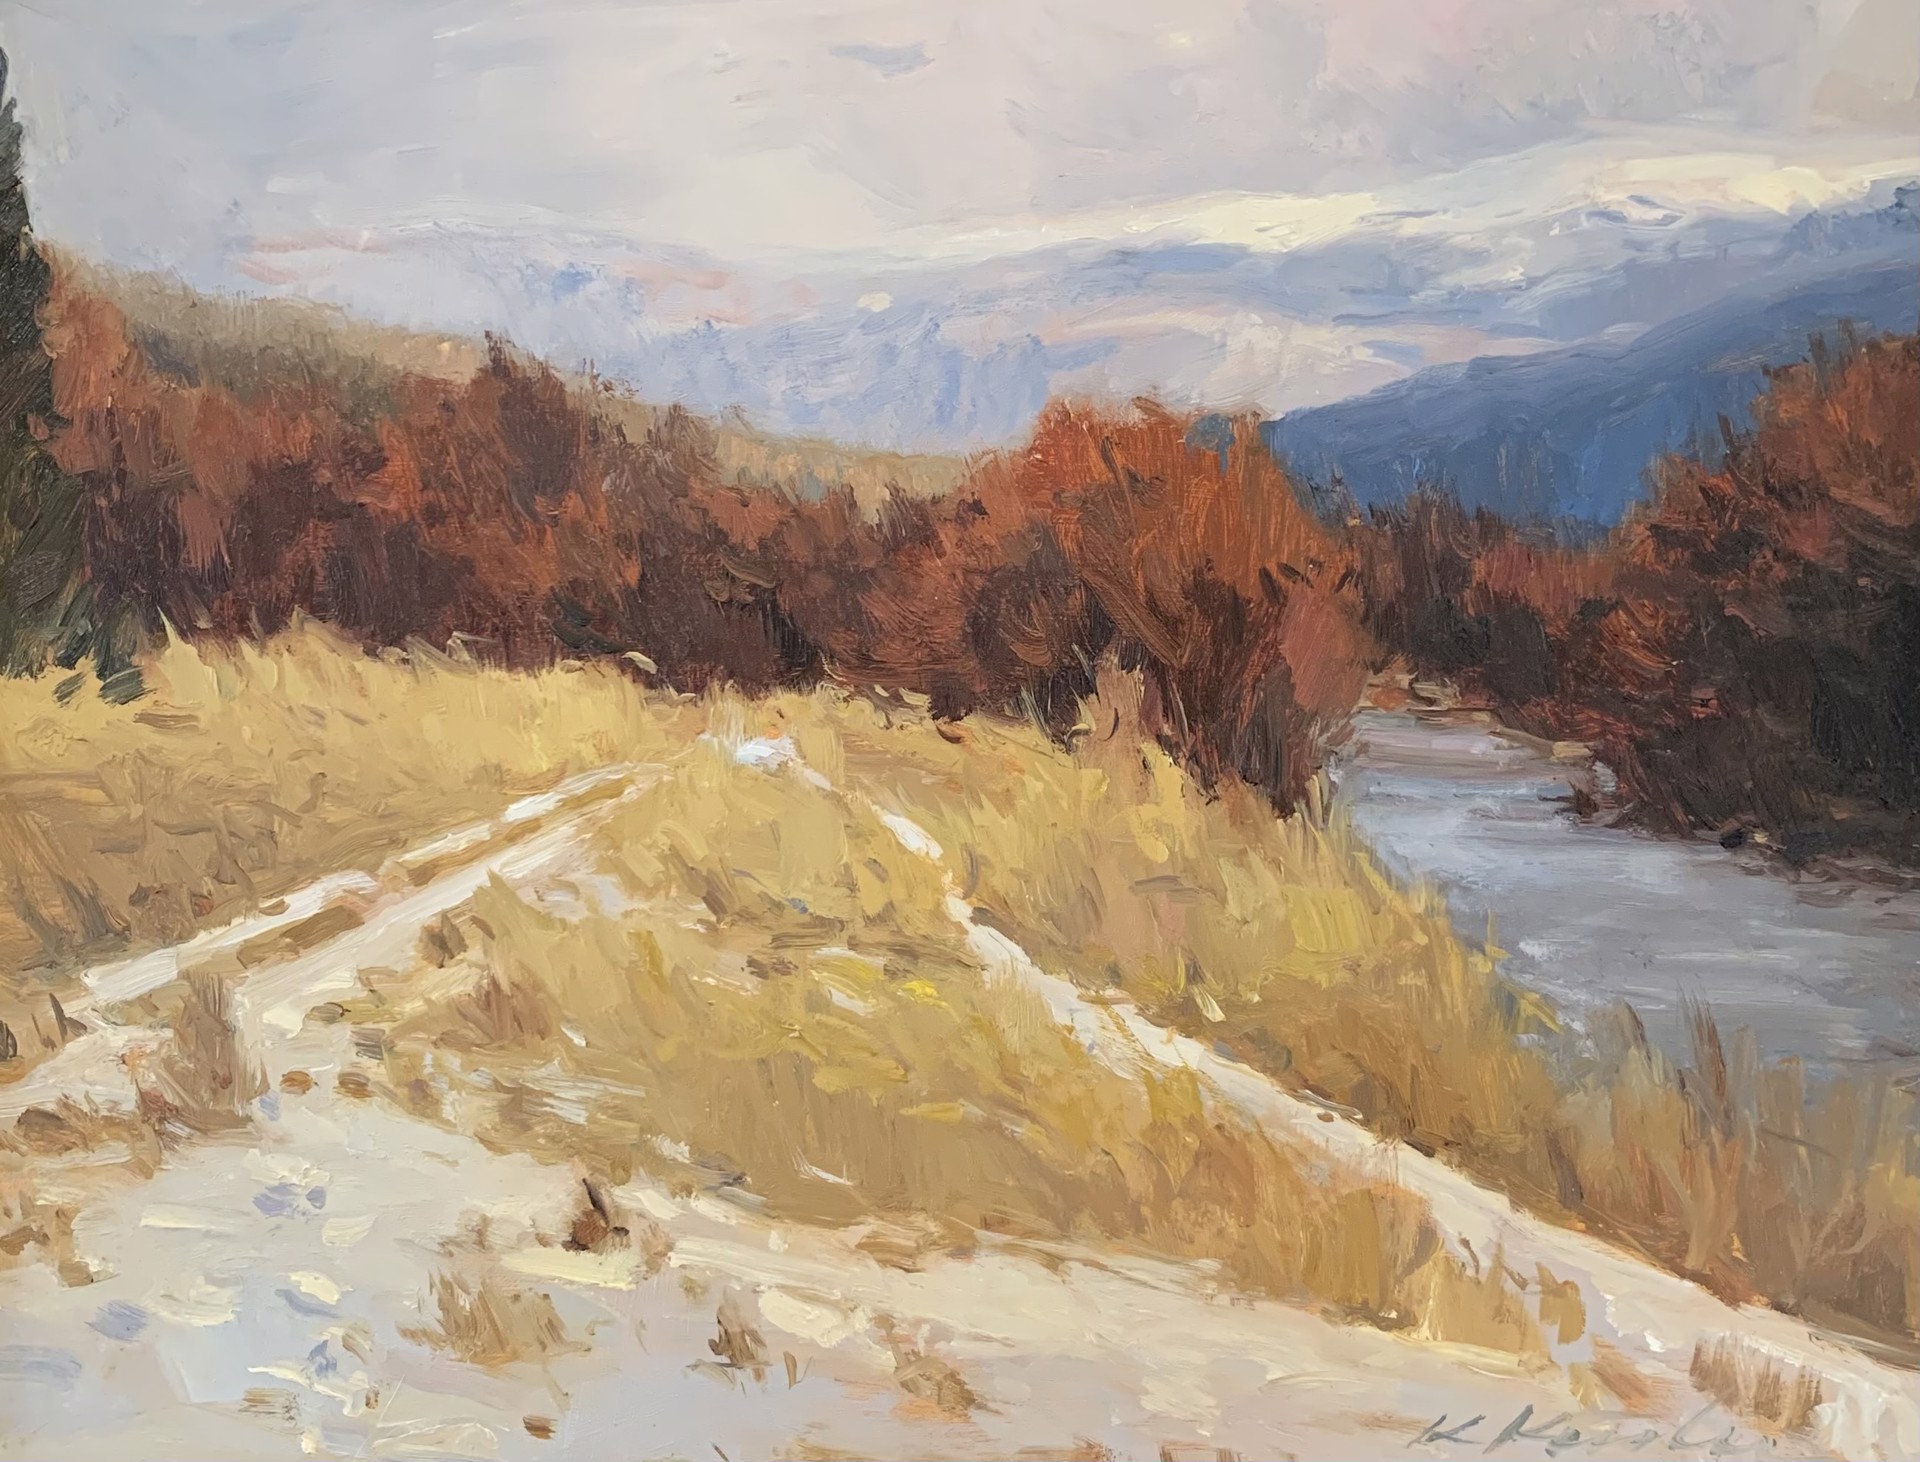 Snow Trails by Kate Kiesler